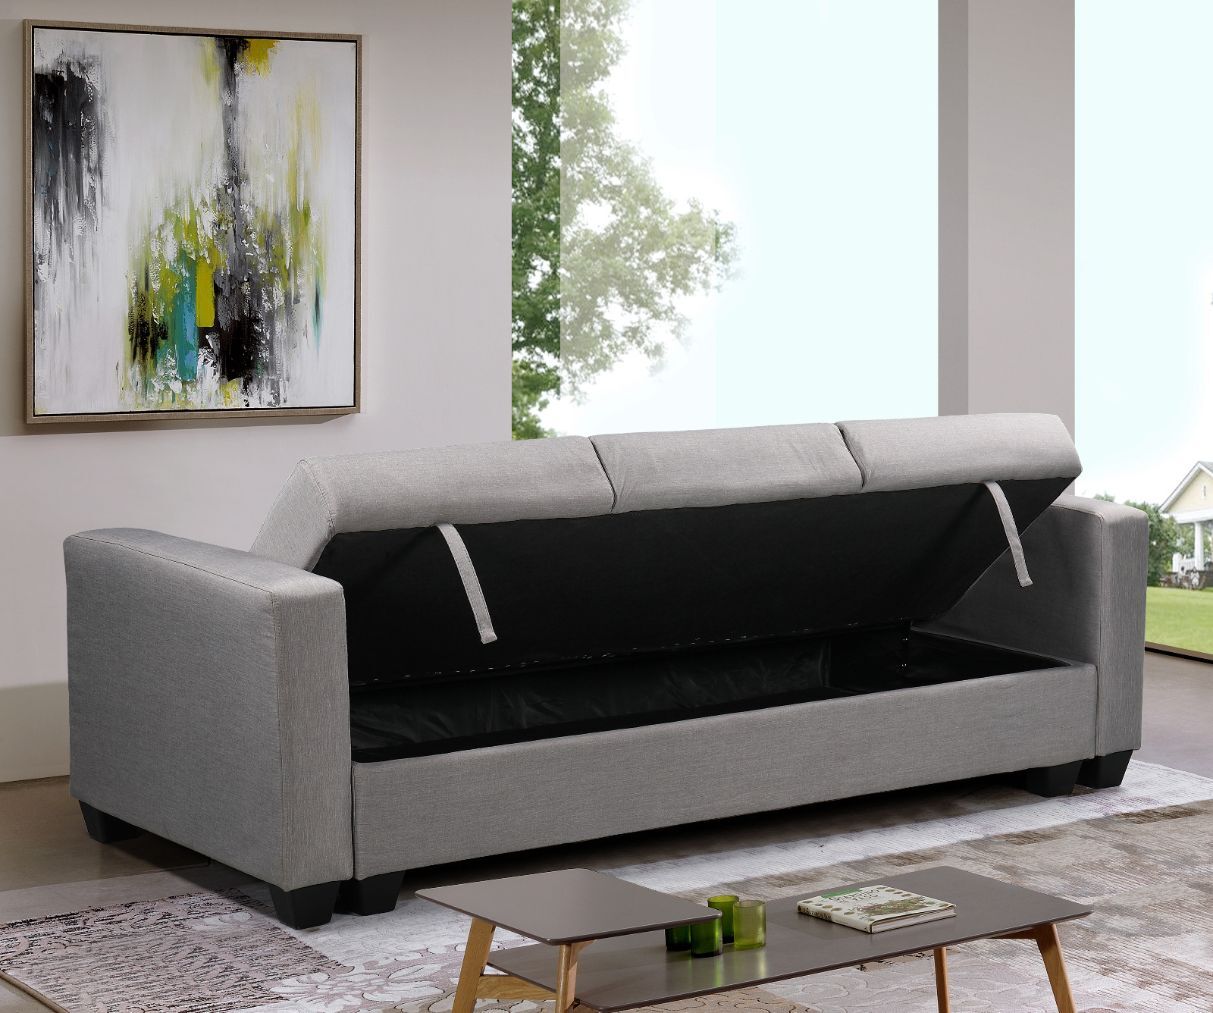 Sofa Cama Keyla con Arcon, 210x85cm